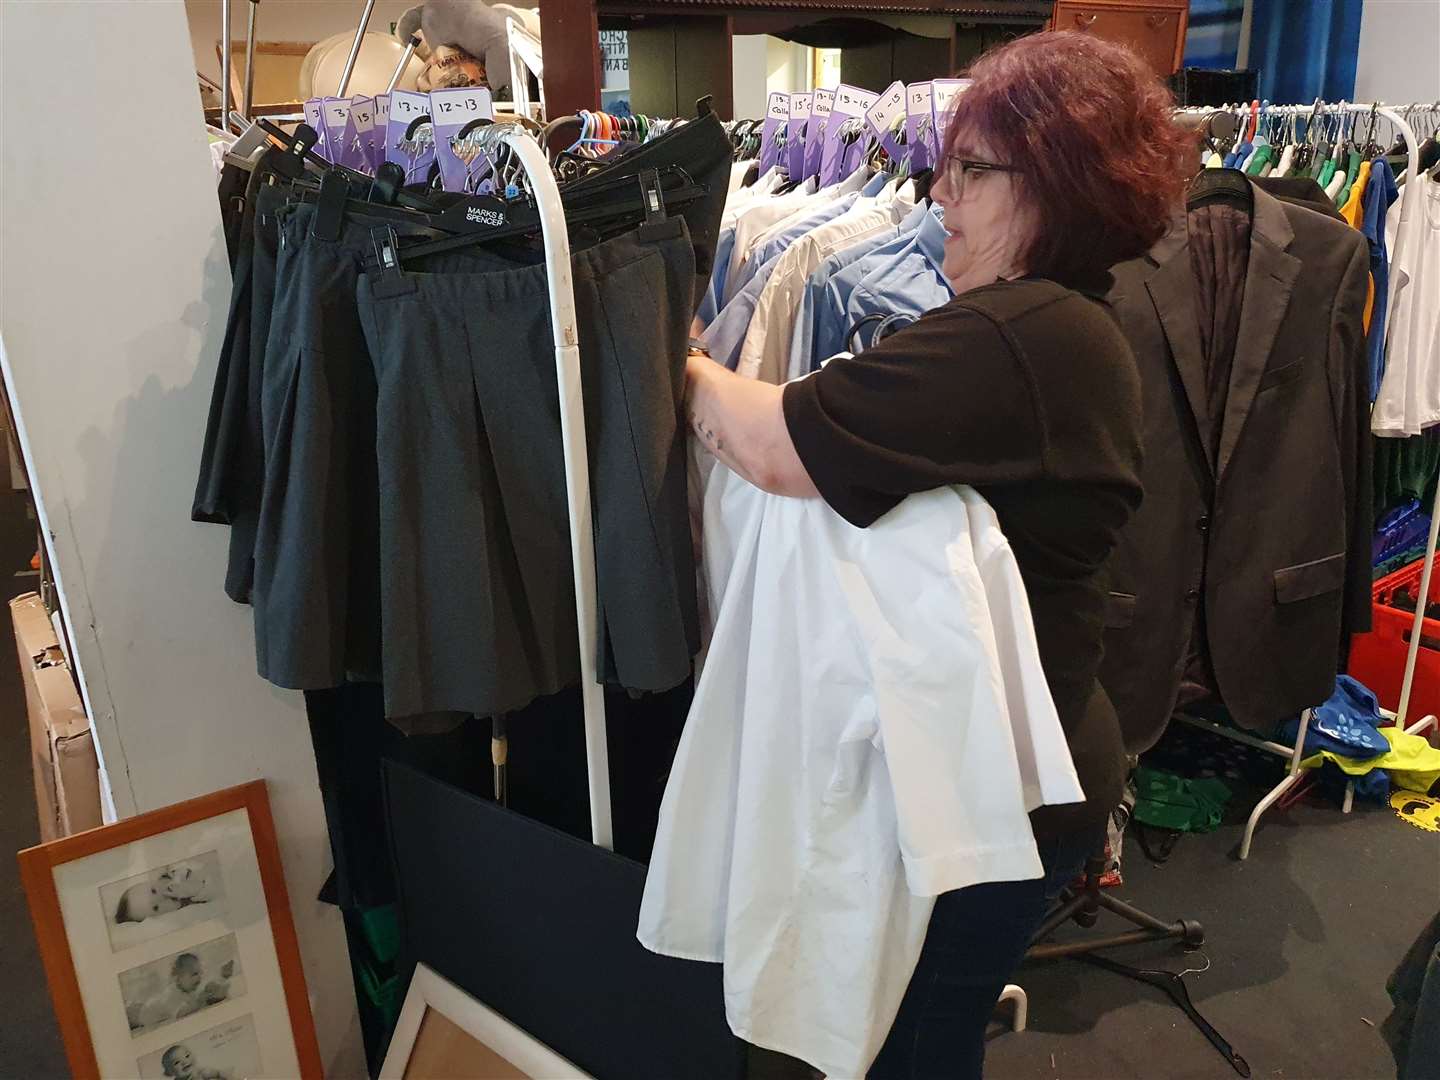 Gina Carpenter, a volunteer coordinator for Gillingham Street Angels, sorts out clothing